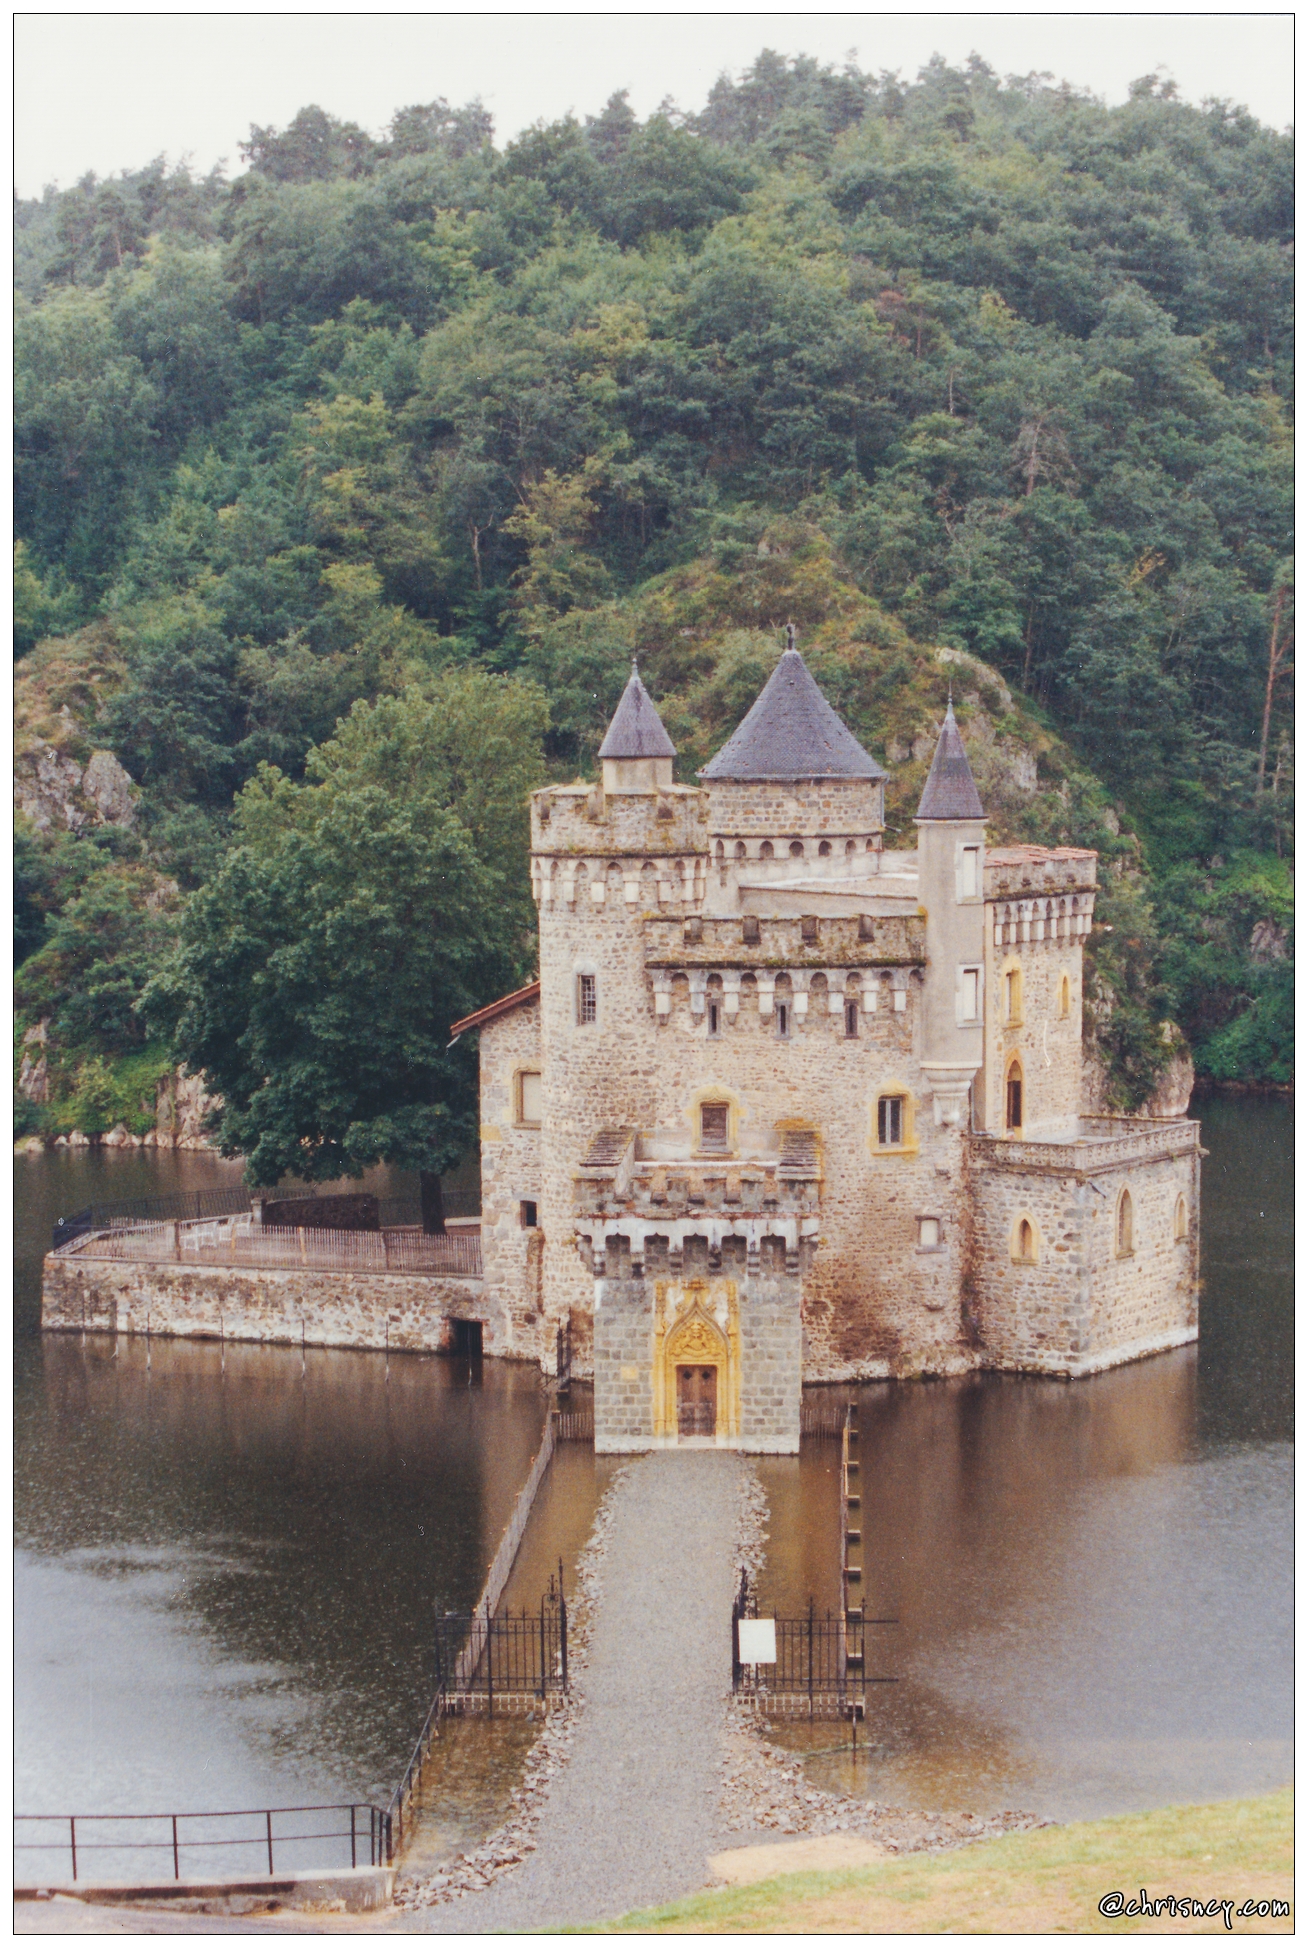 19920800-0022-Chateau_de_la_Roche_style_Troubadour.jpg